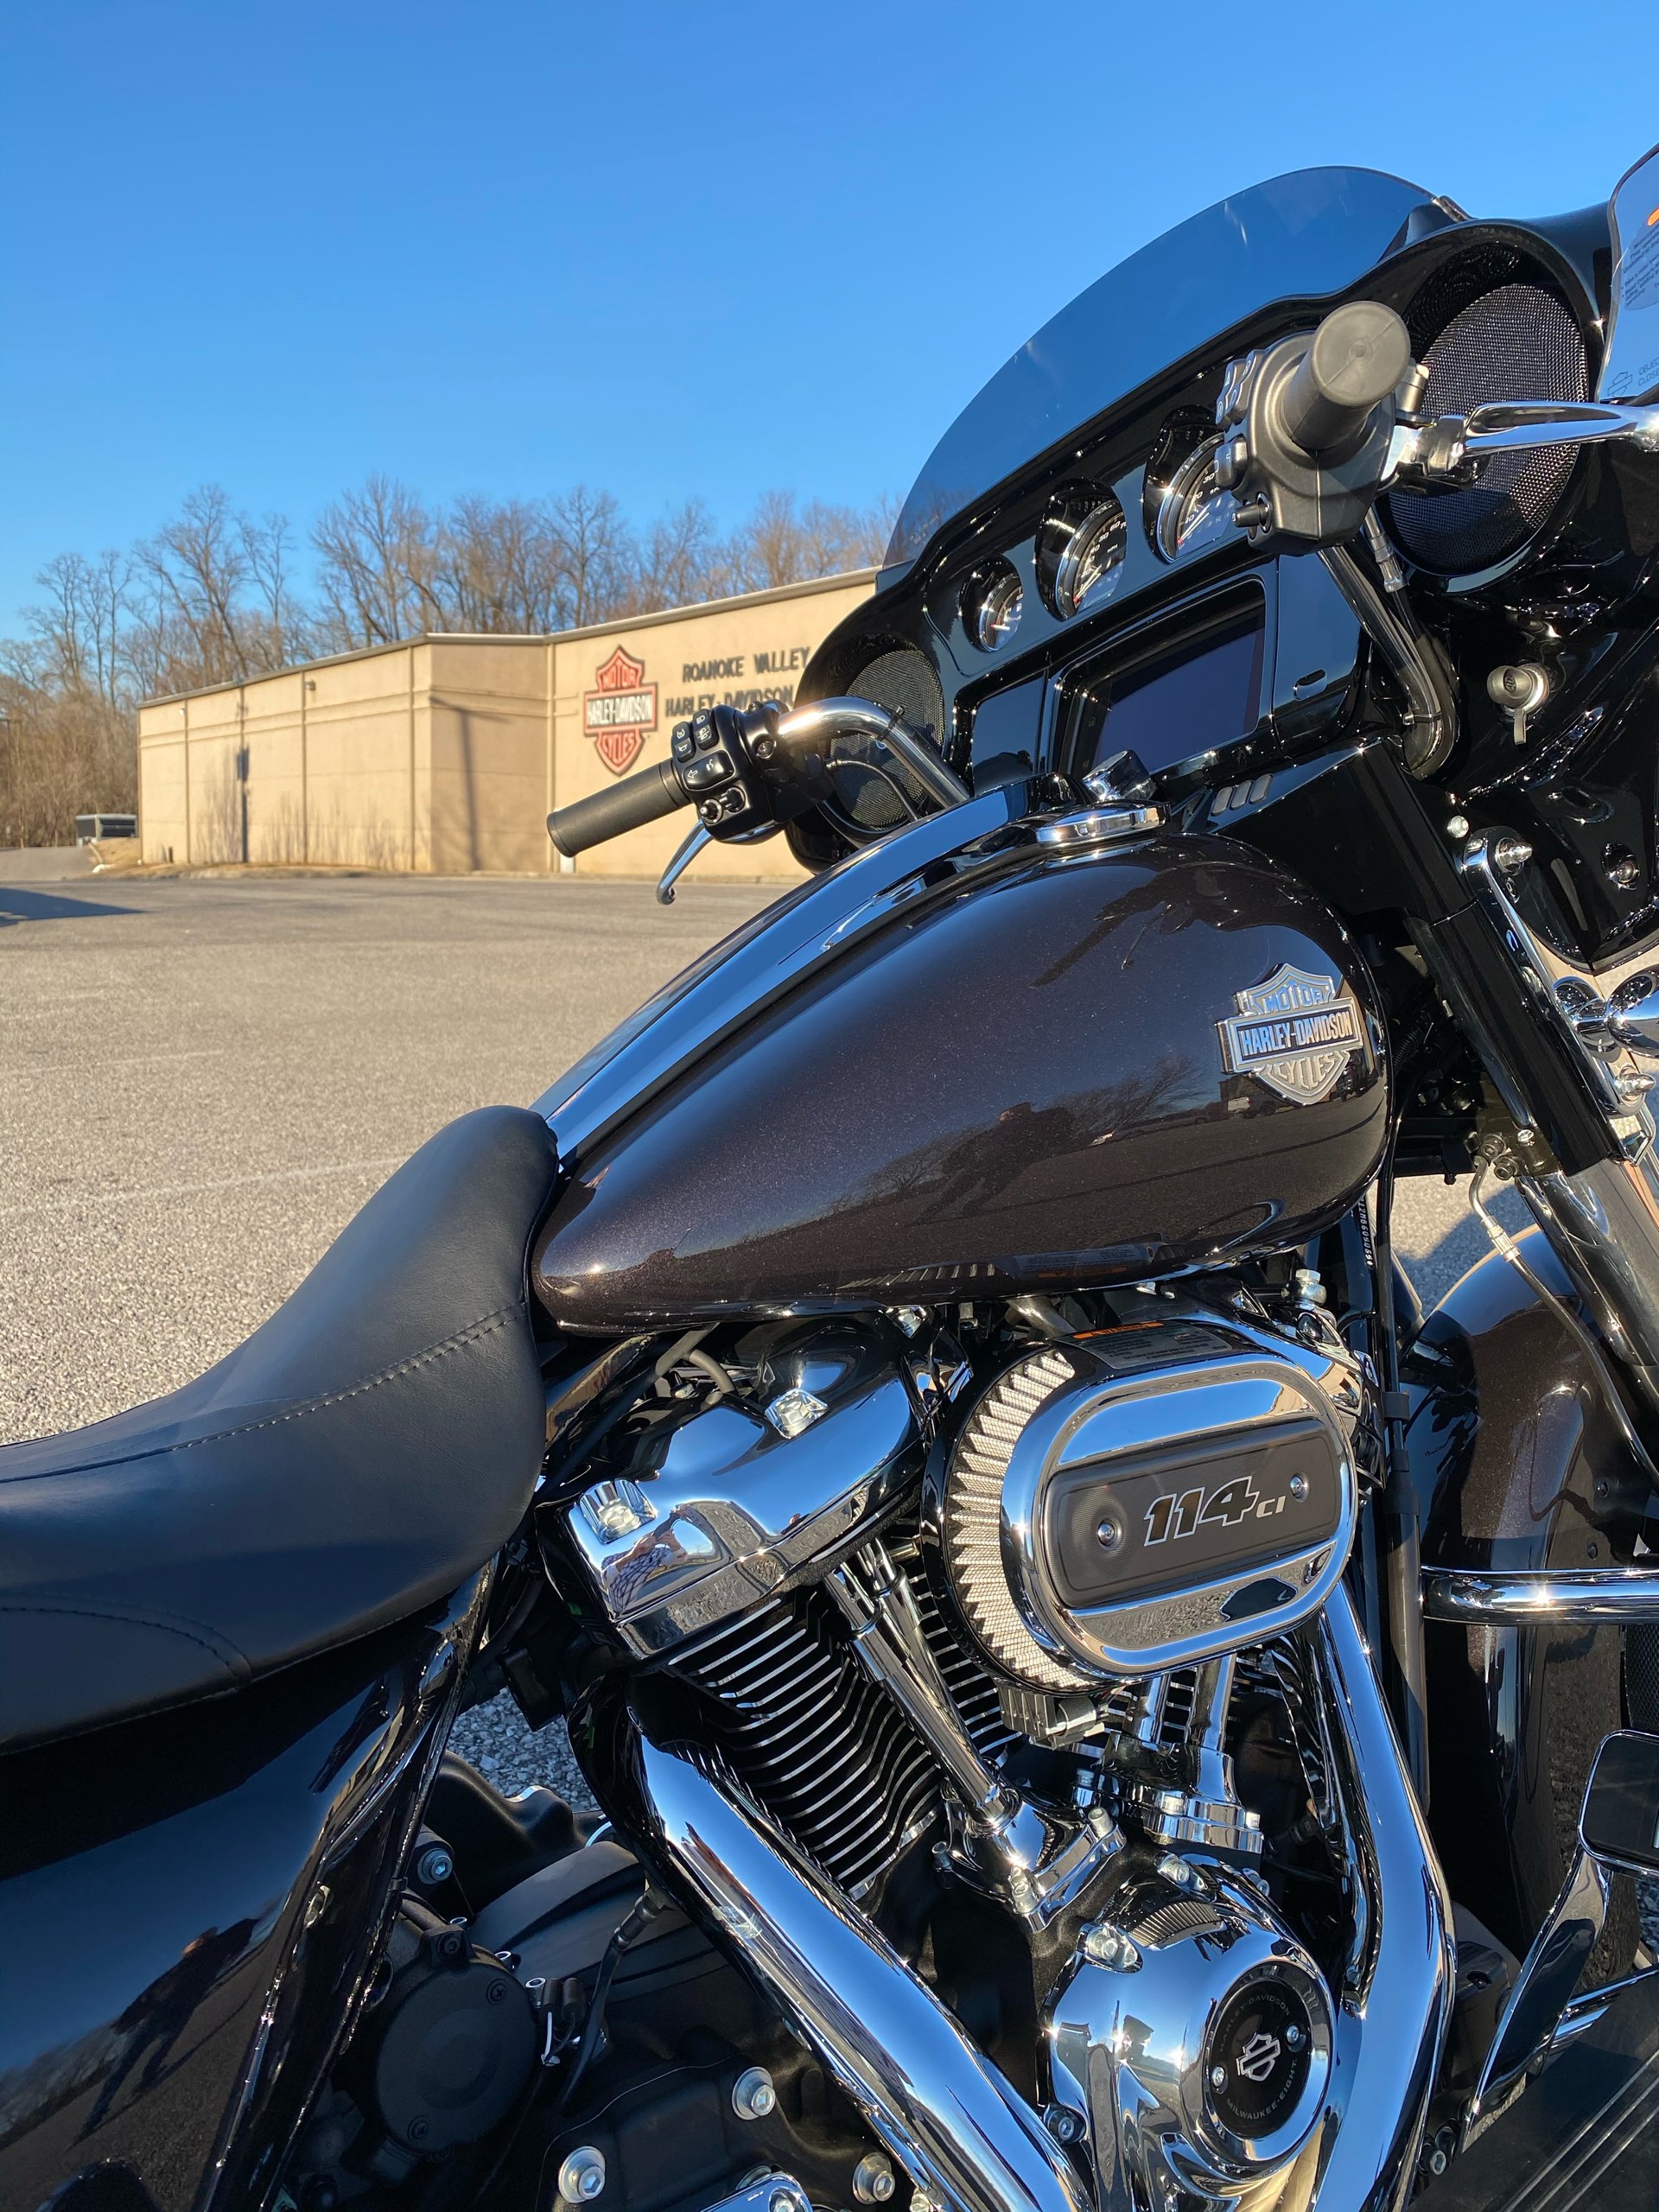 New 2021 Harley Davidson Street Glide Special Black Jack Metallic Motorcycles In Roanoke Va 613057